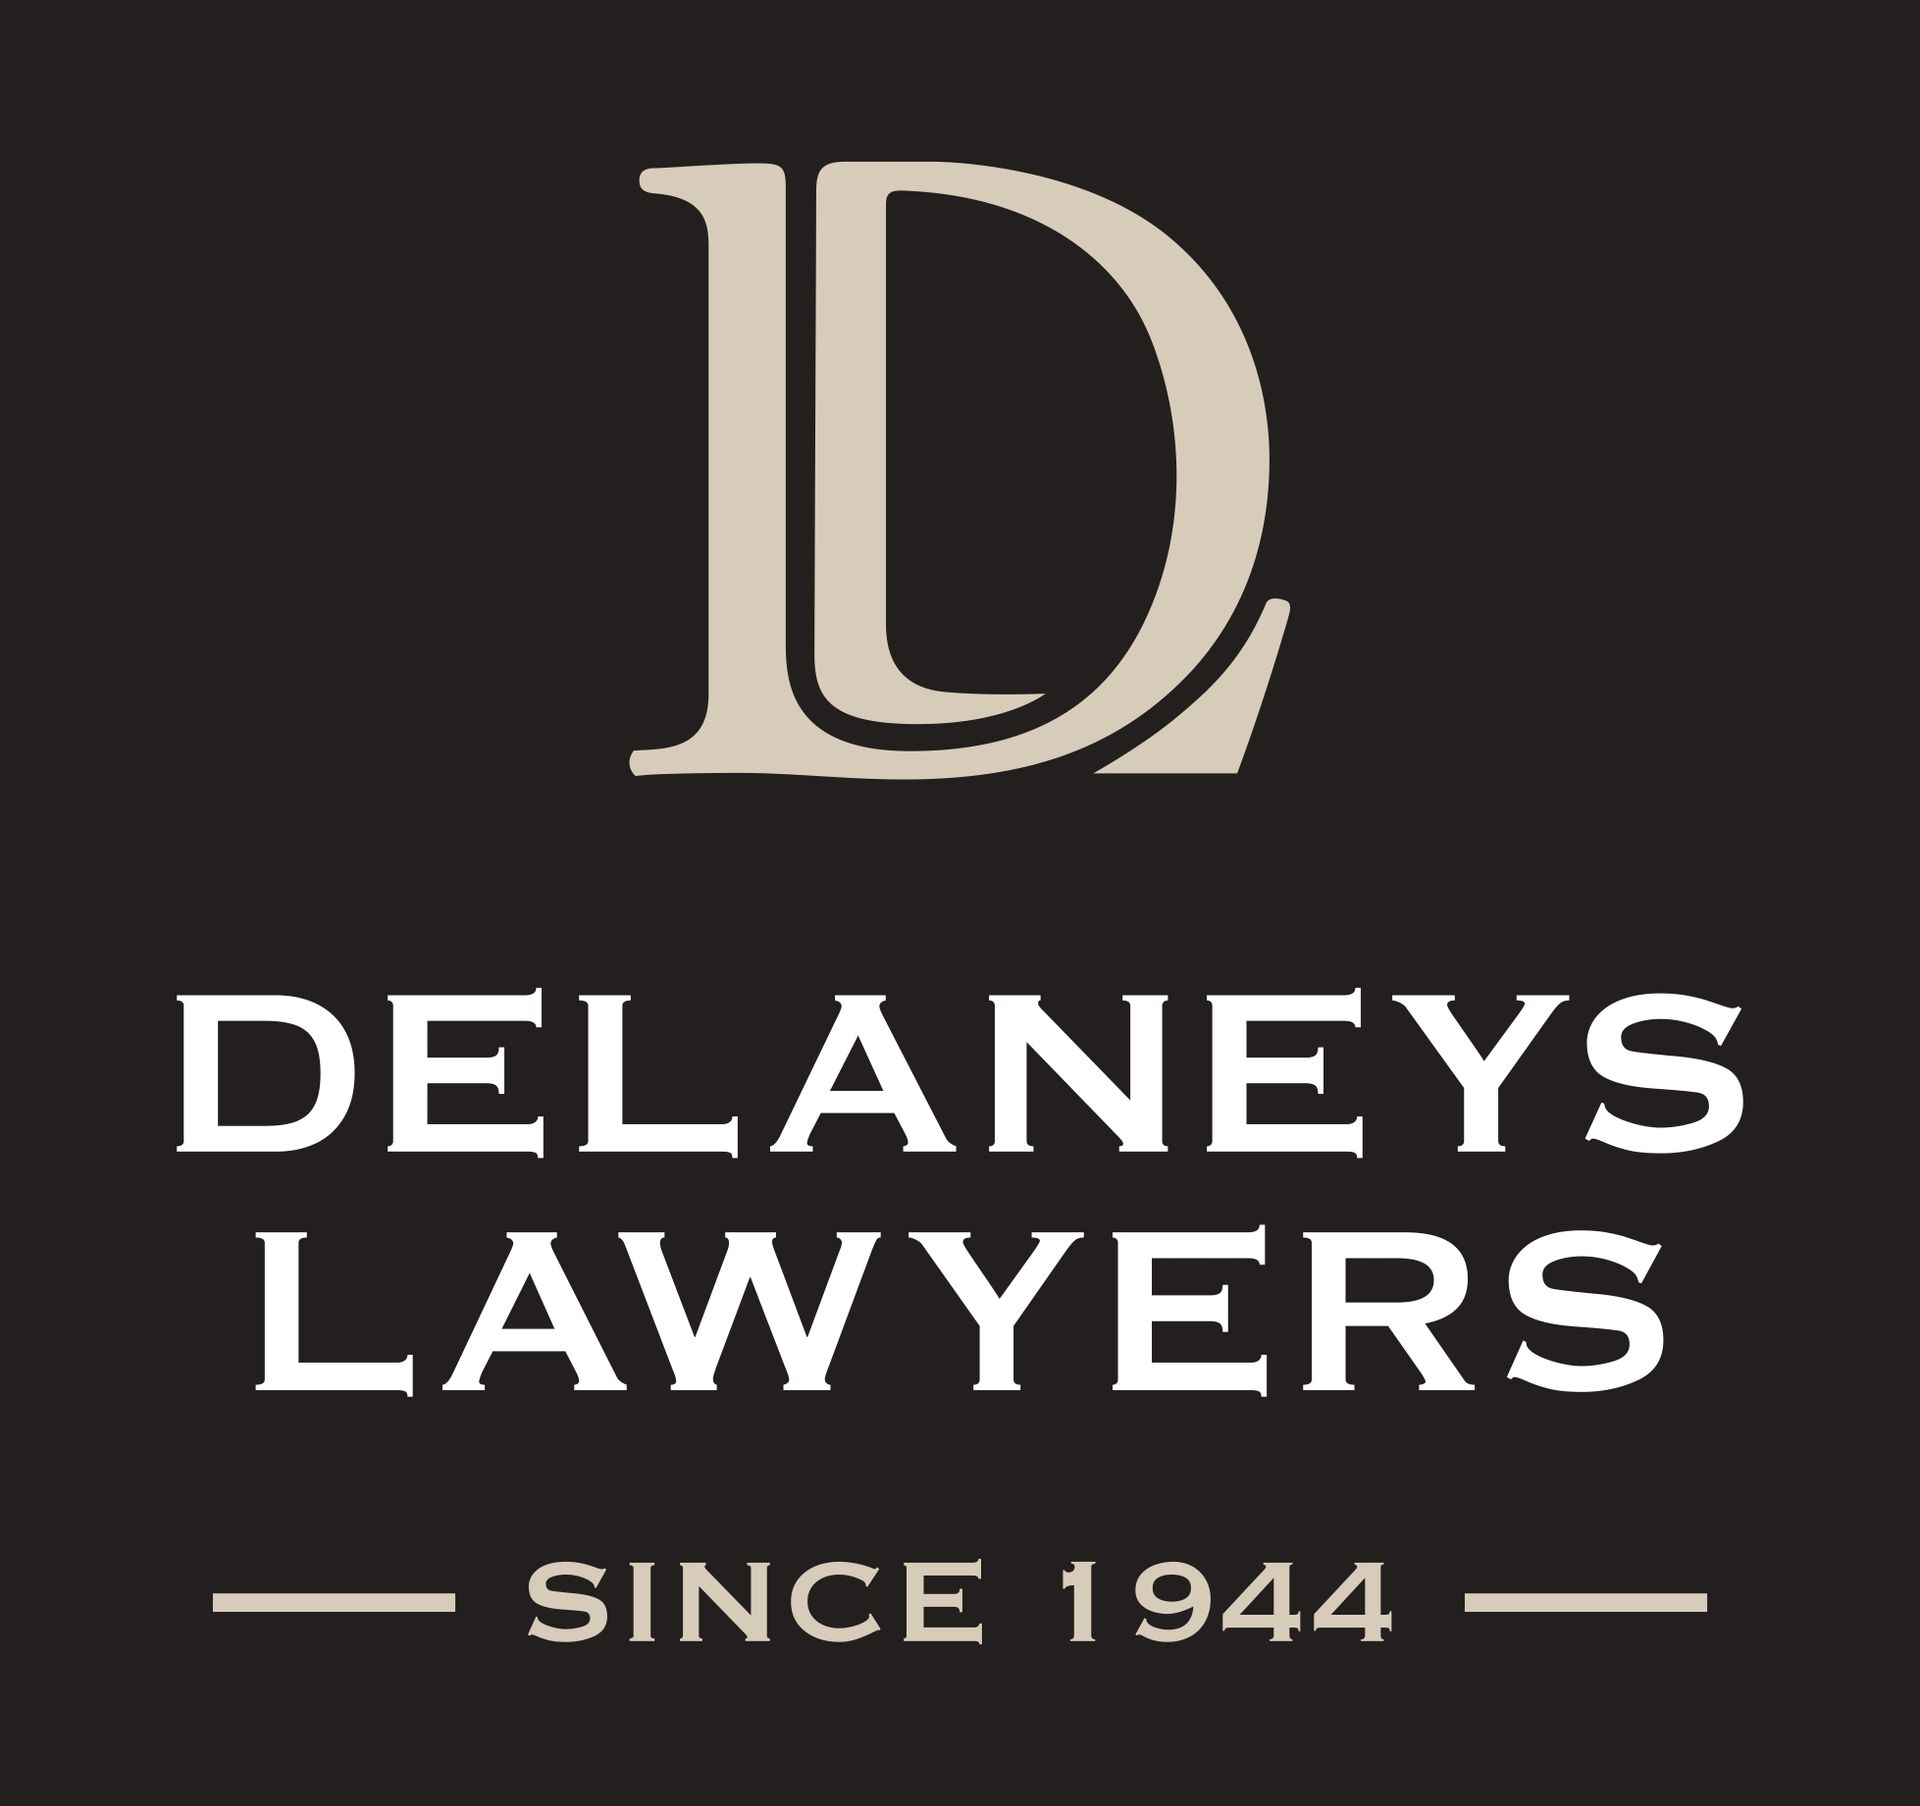 Delaneys Lawyers